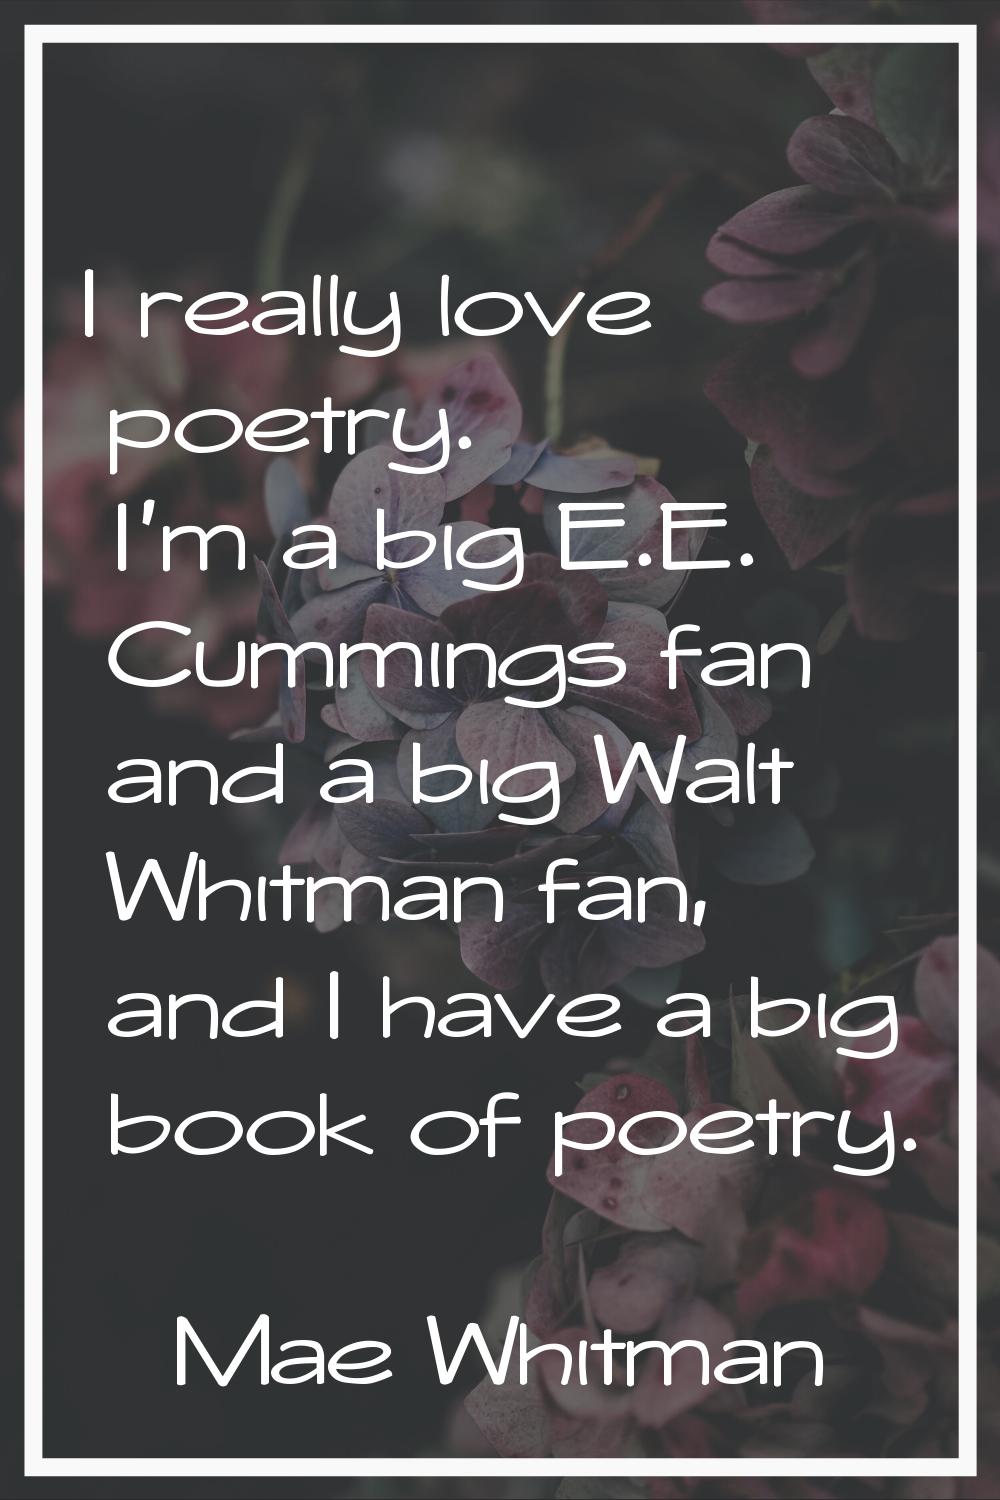 I really love poetry. I'm a big E.E. Cummings fan and a big Walt Whitman fan, and I have a big book